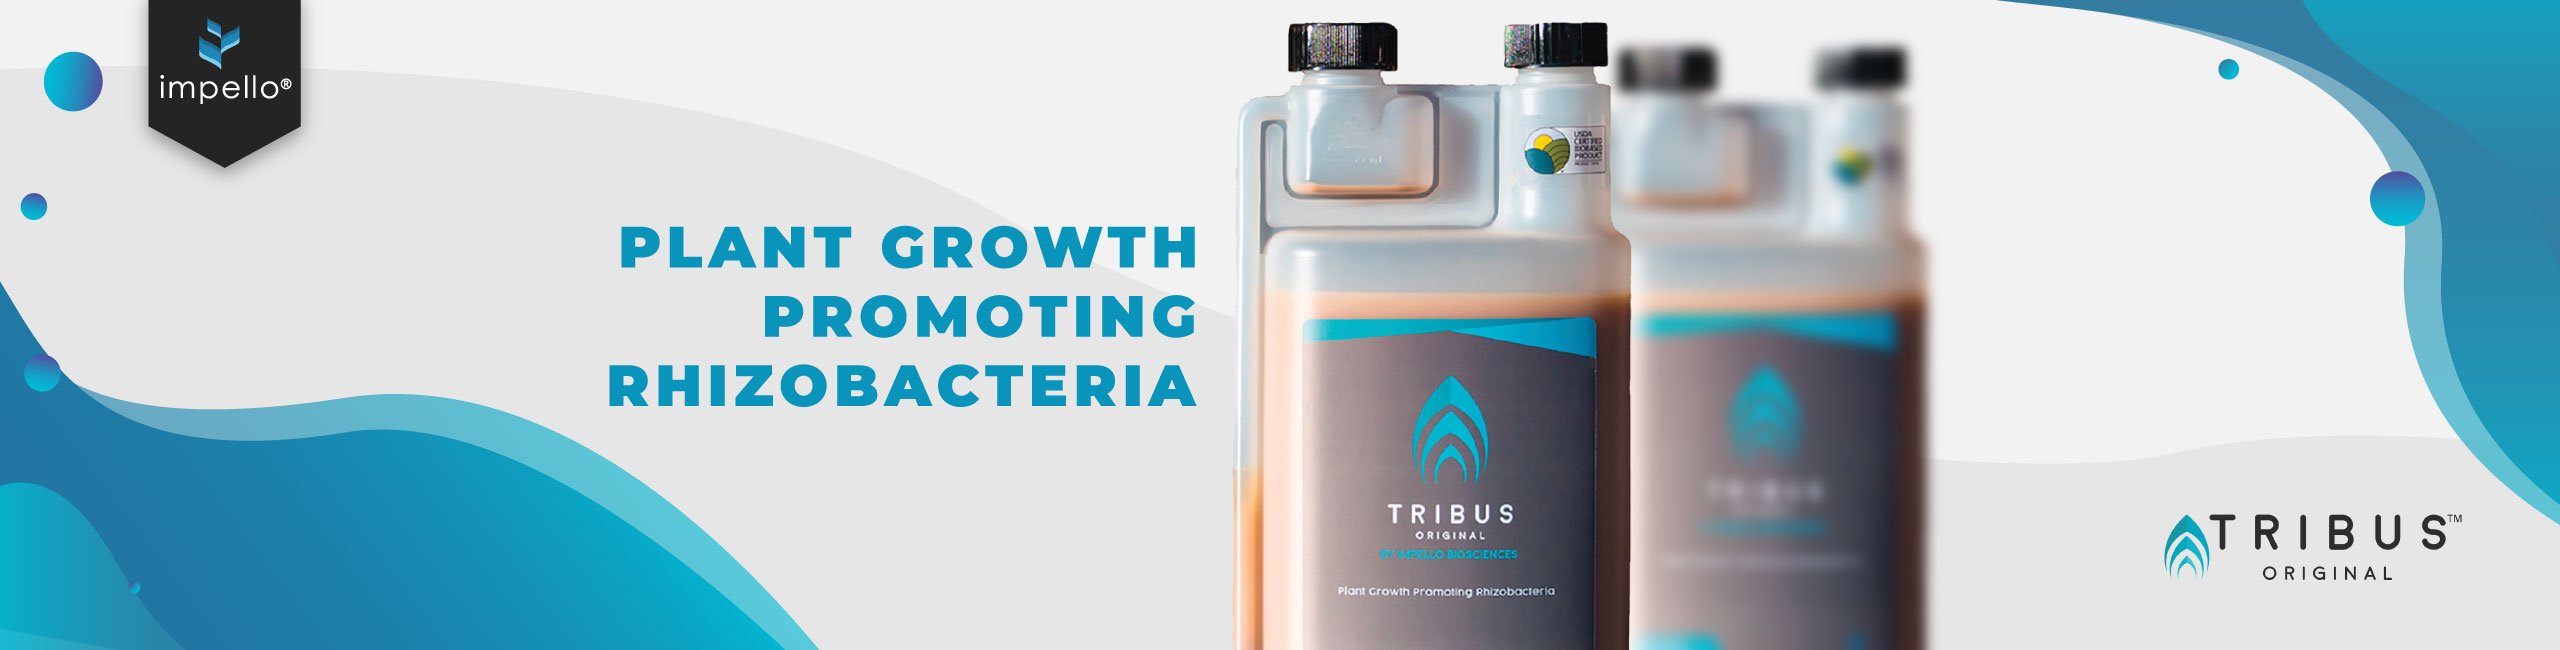 Impello Bio Tribus Plant Growth Promoting Rhizobacteria